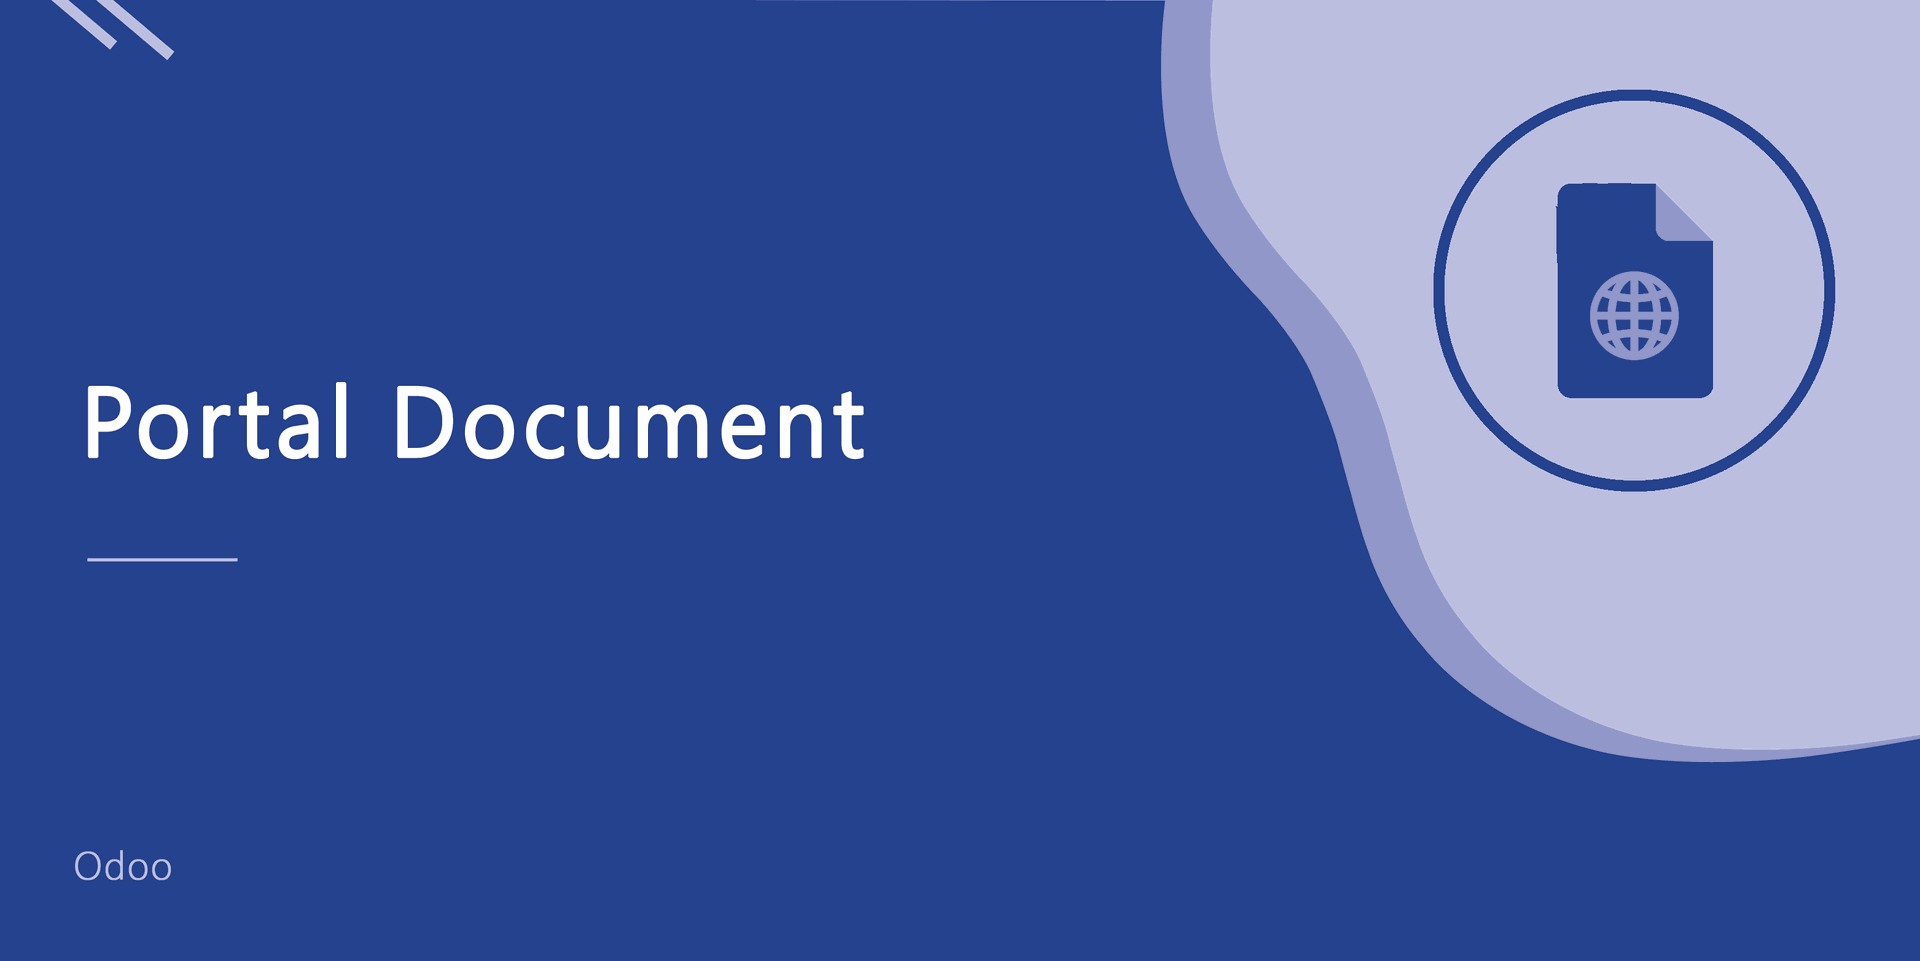 Portal Document
